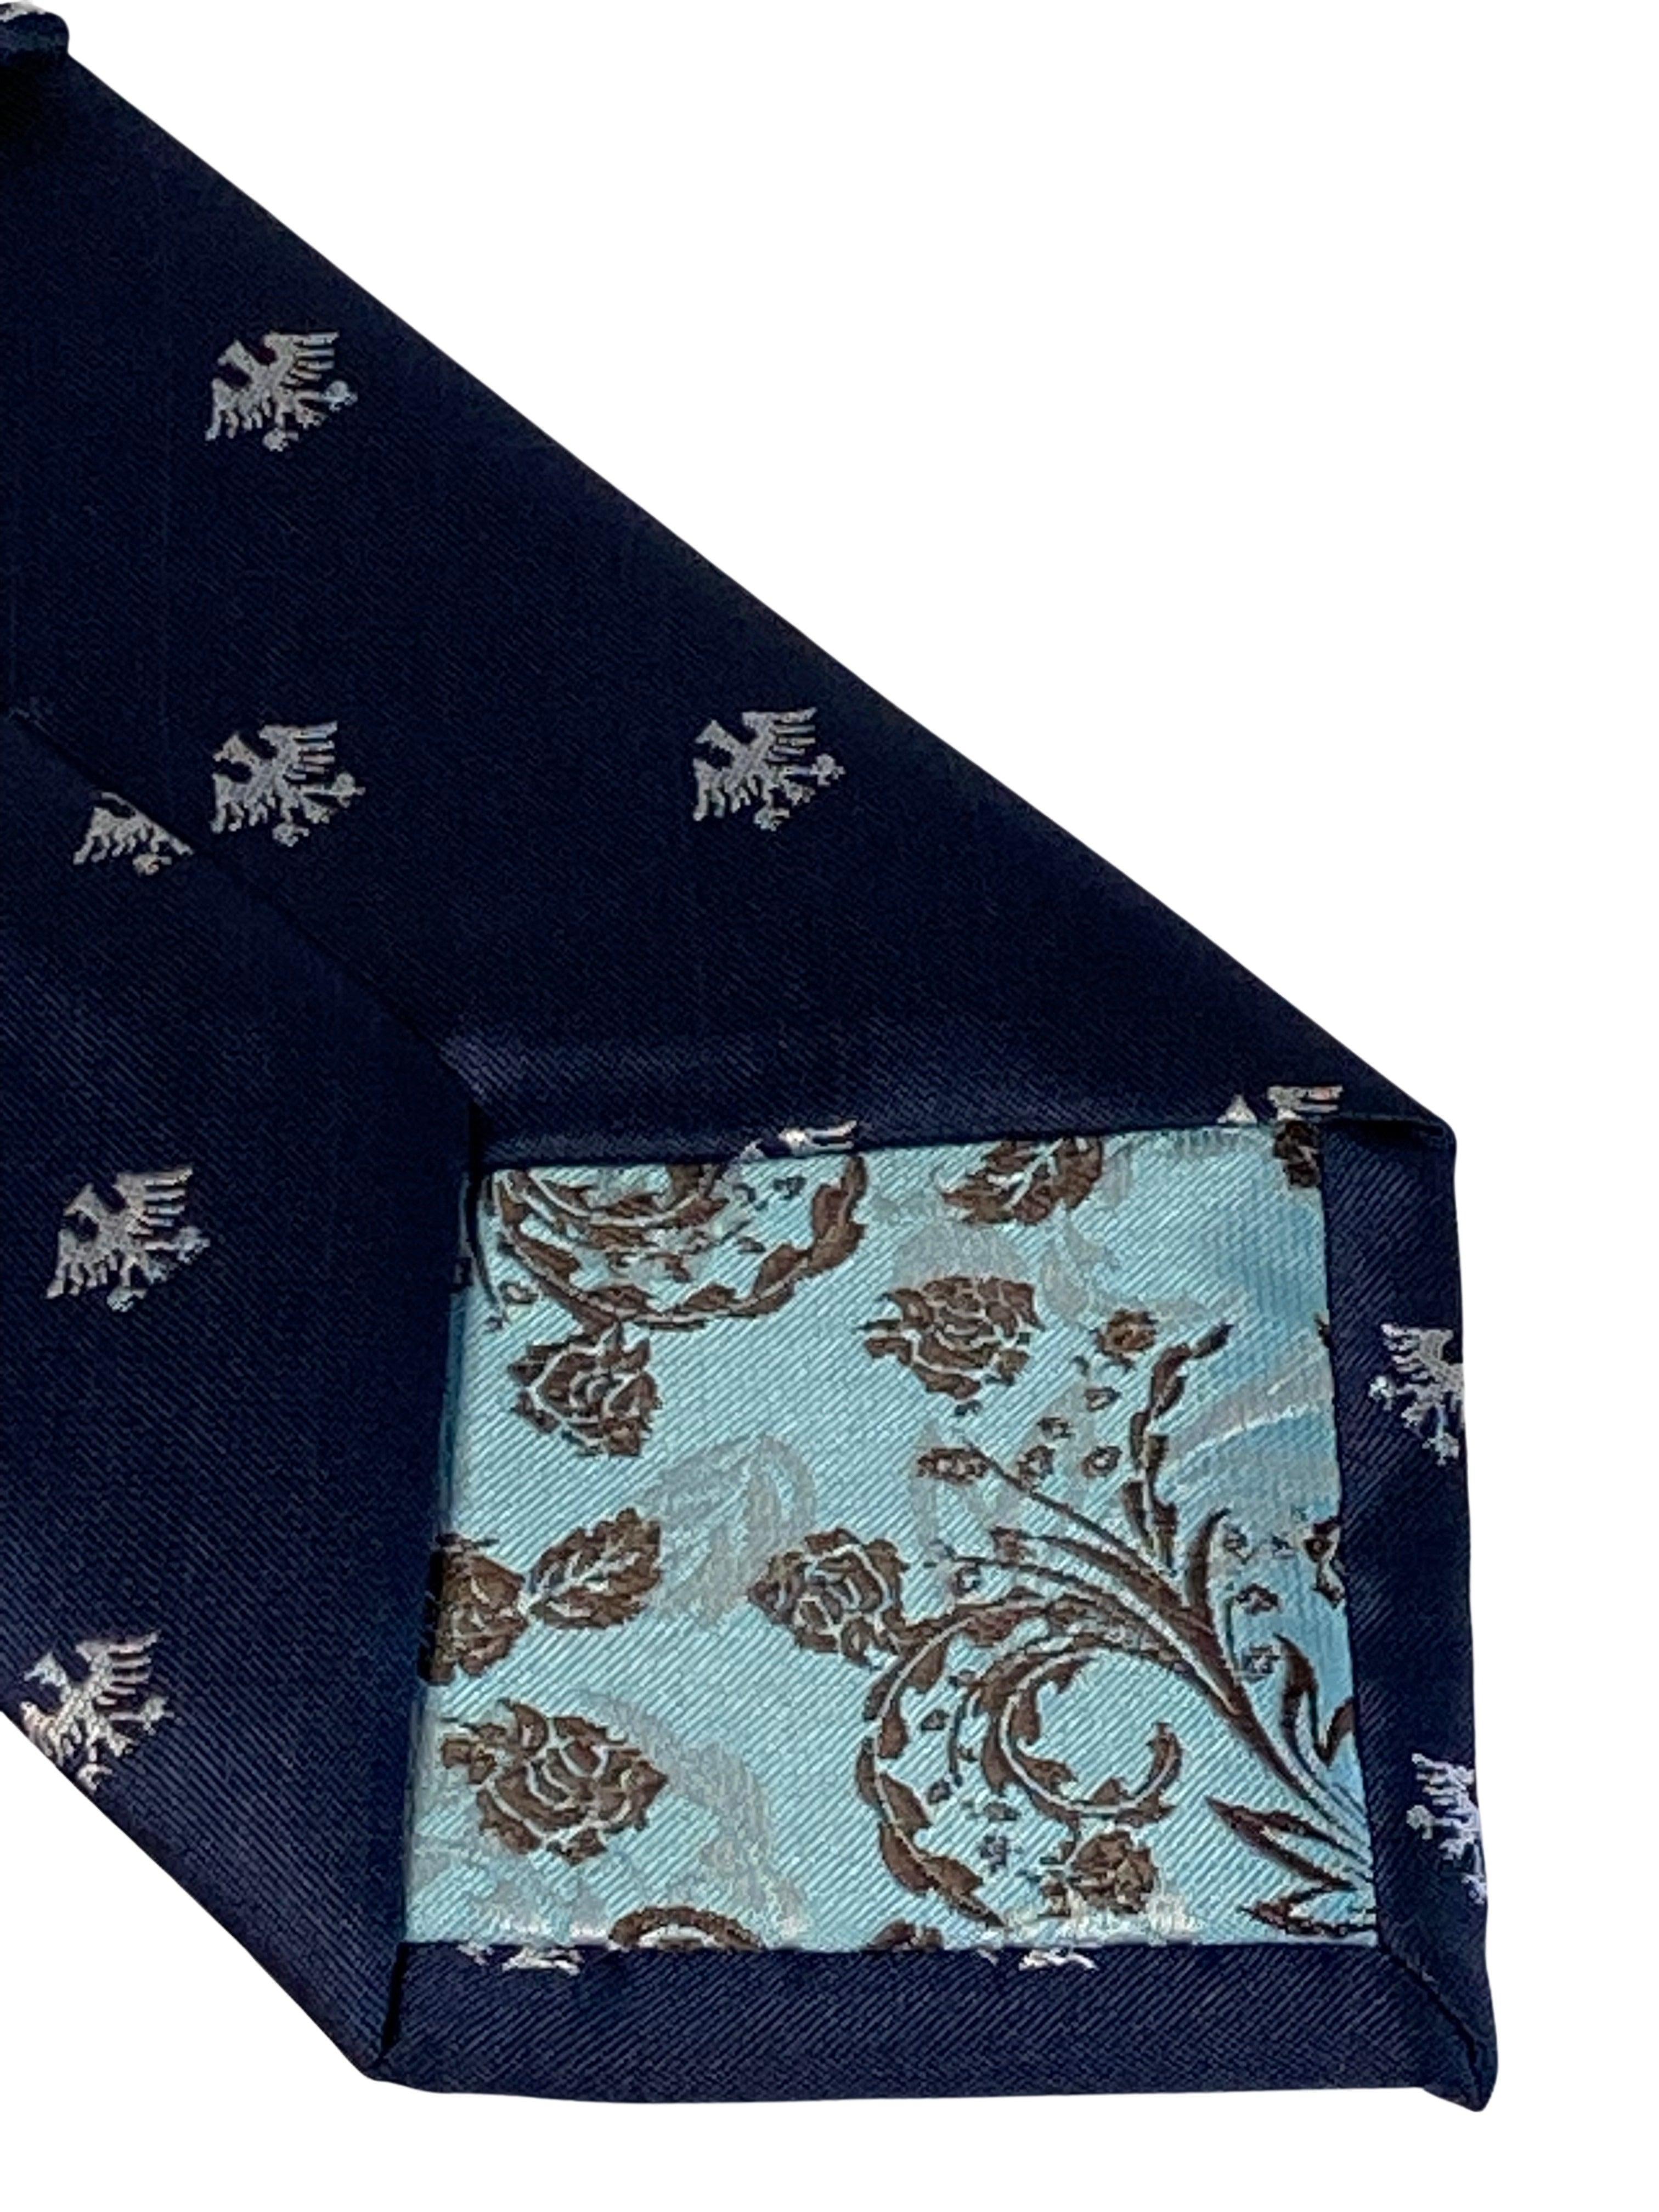 Frederick Thomas navy blue tie with Christmas pudding design 